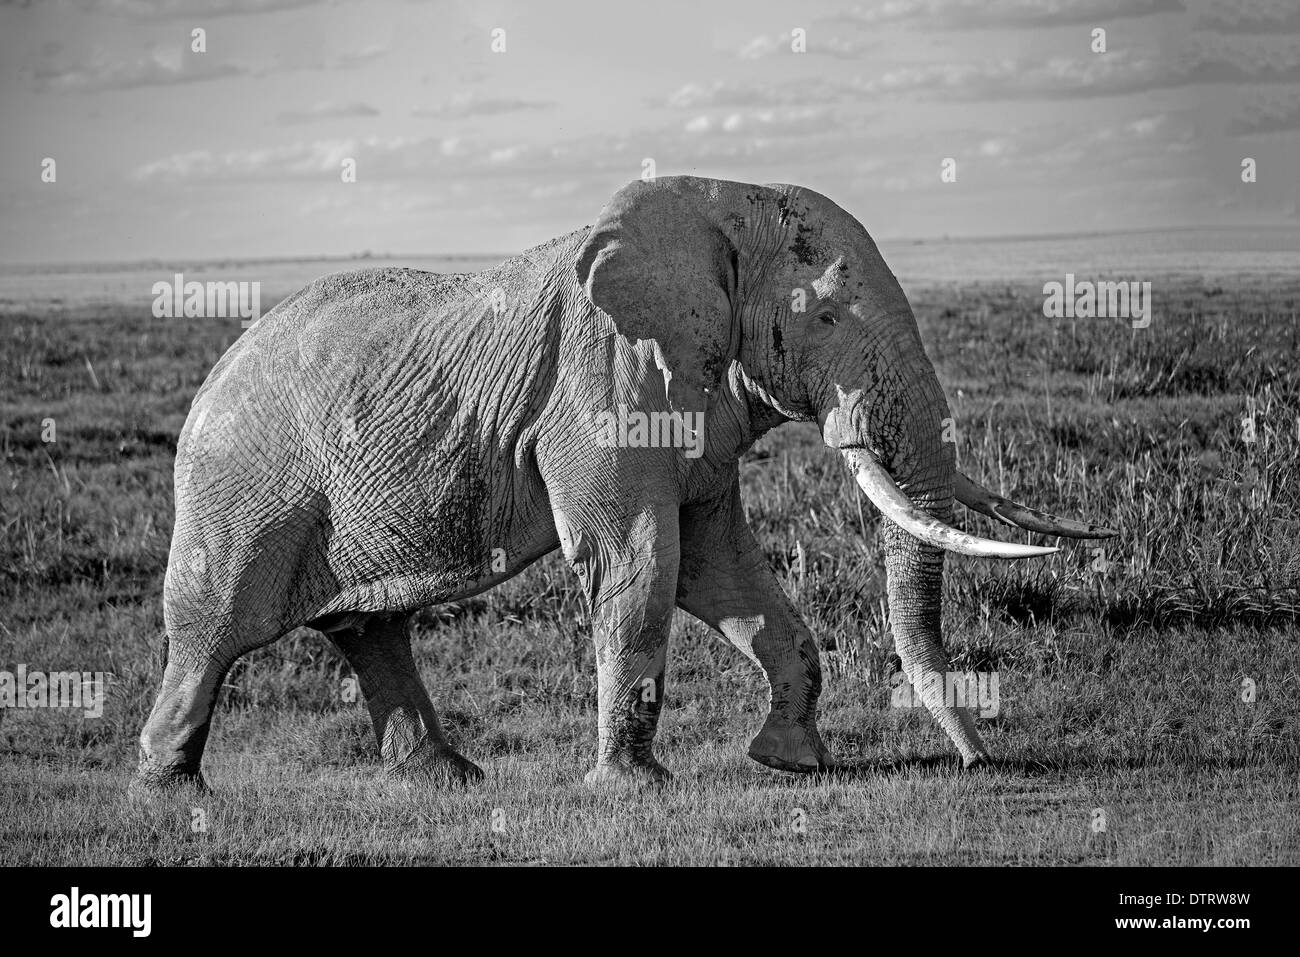 Ein monochromes Bild eines riesigen afrikanischen Elefanten im Amboseli Nationalpark, Kenia, Afrika Stockfoto